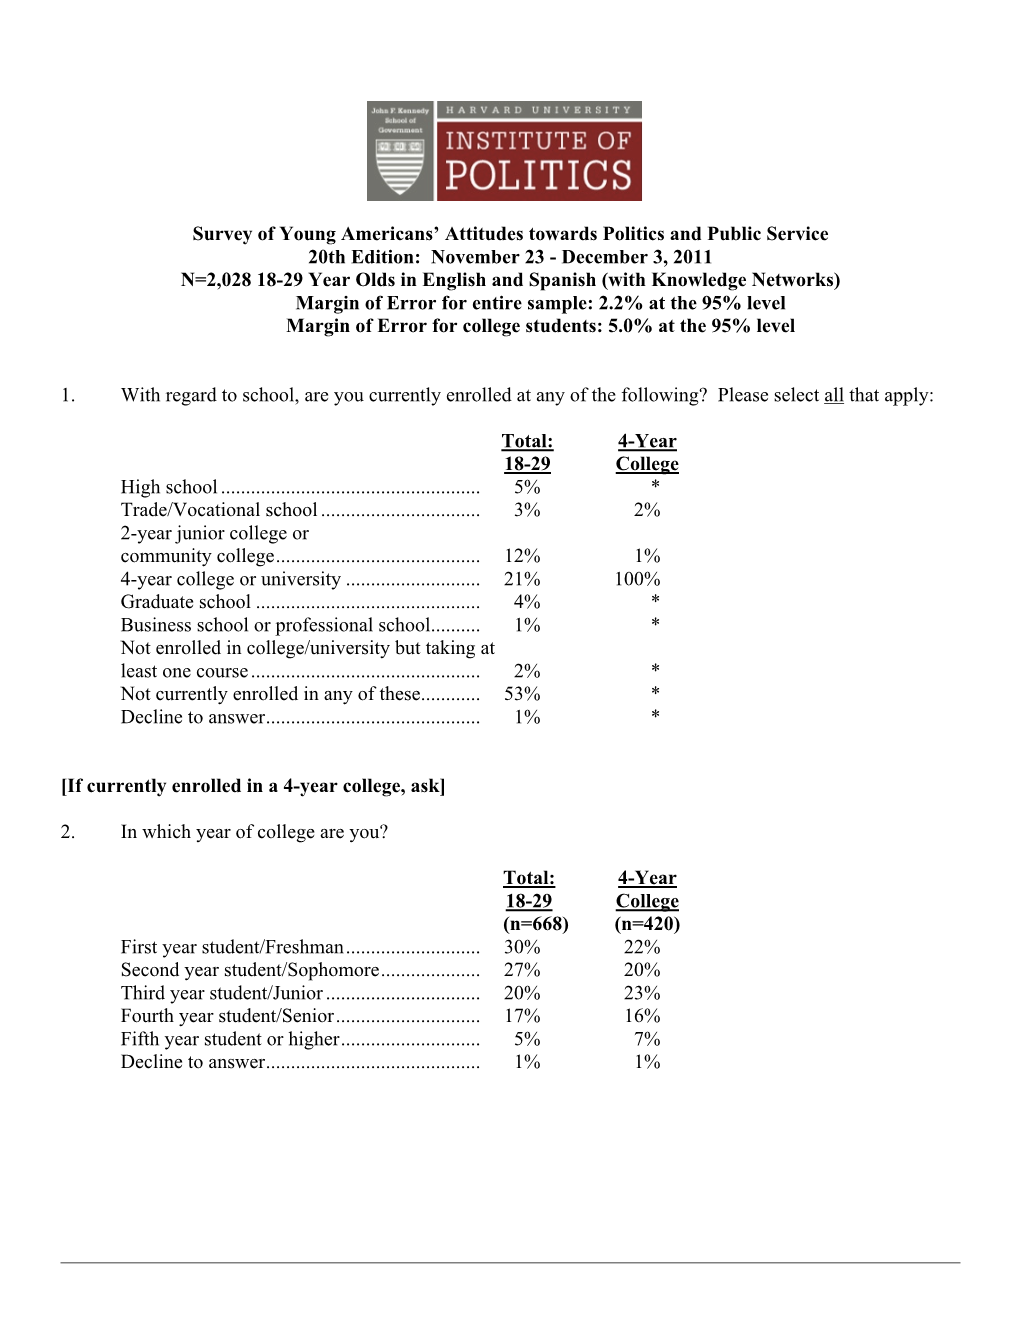 Survey of Young Americans' Attitudes Towards Politics and Public Service